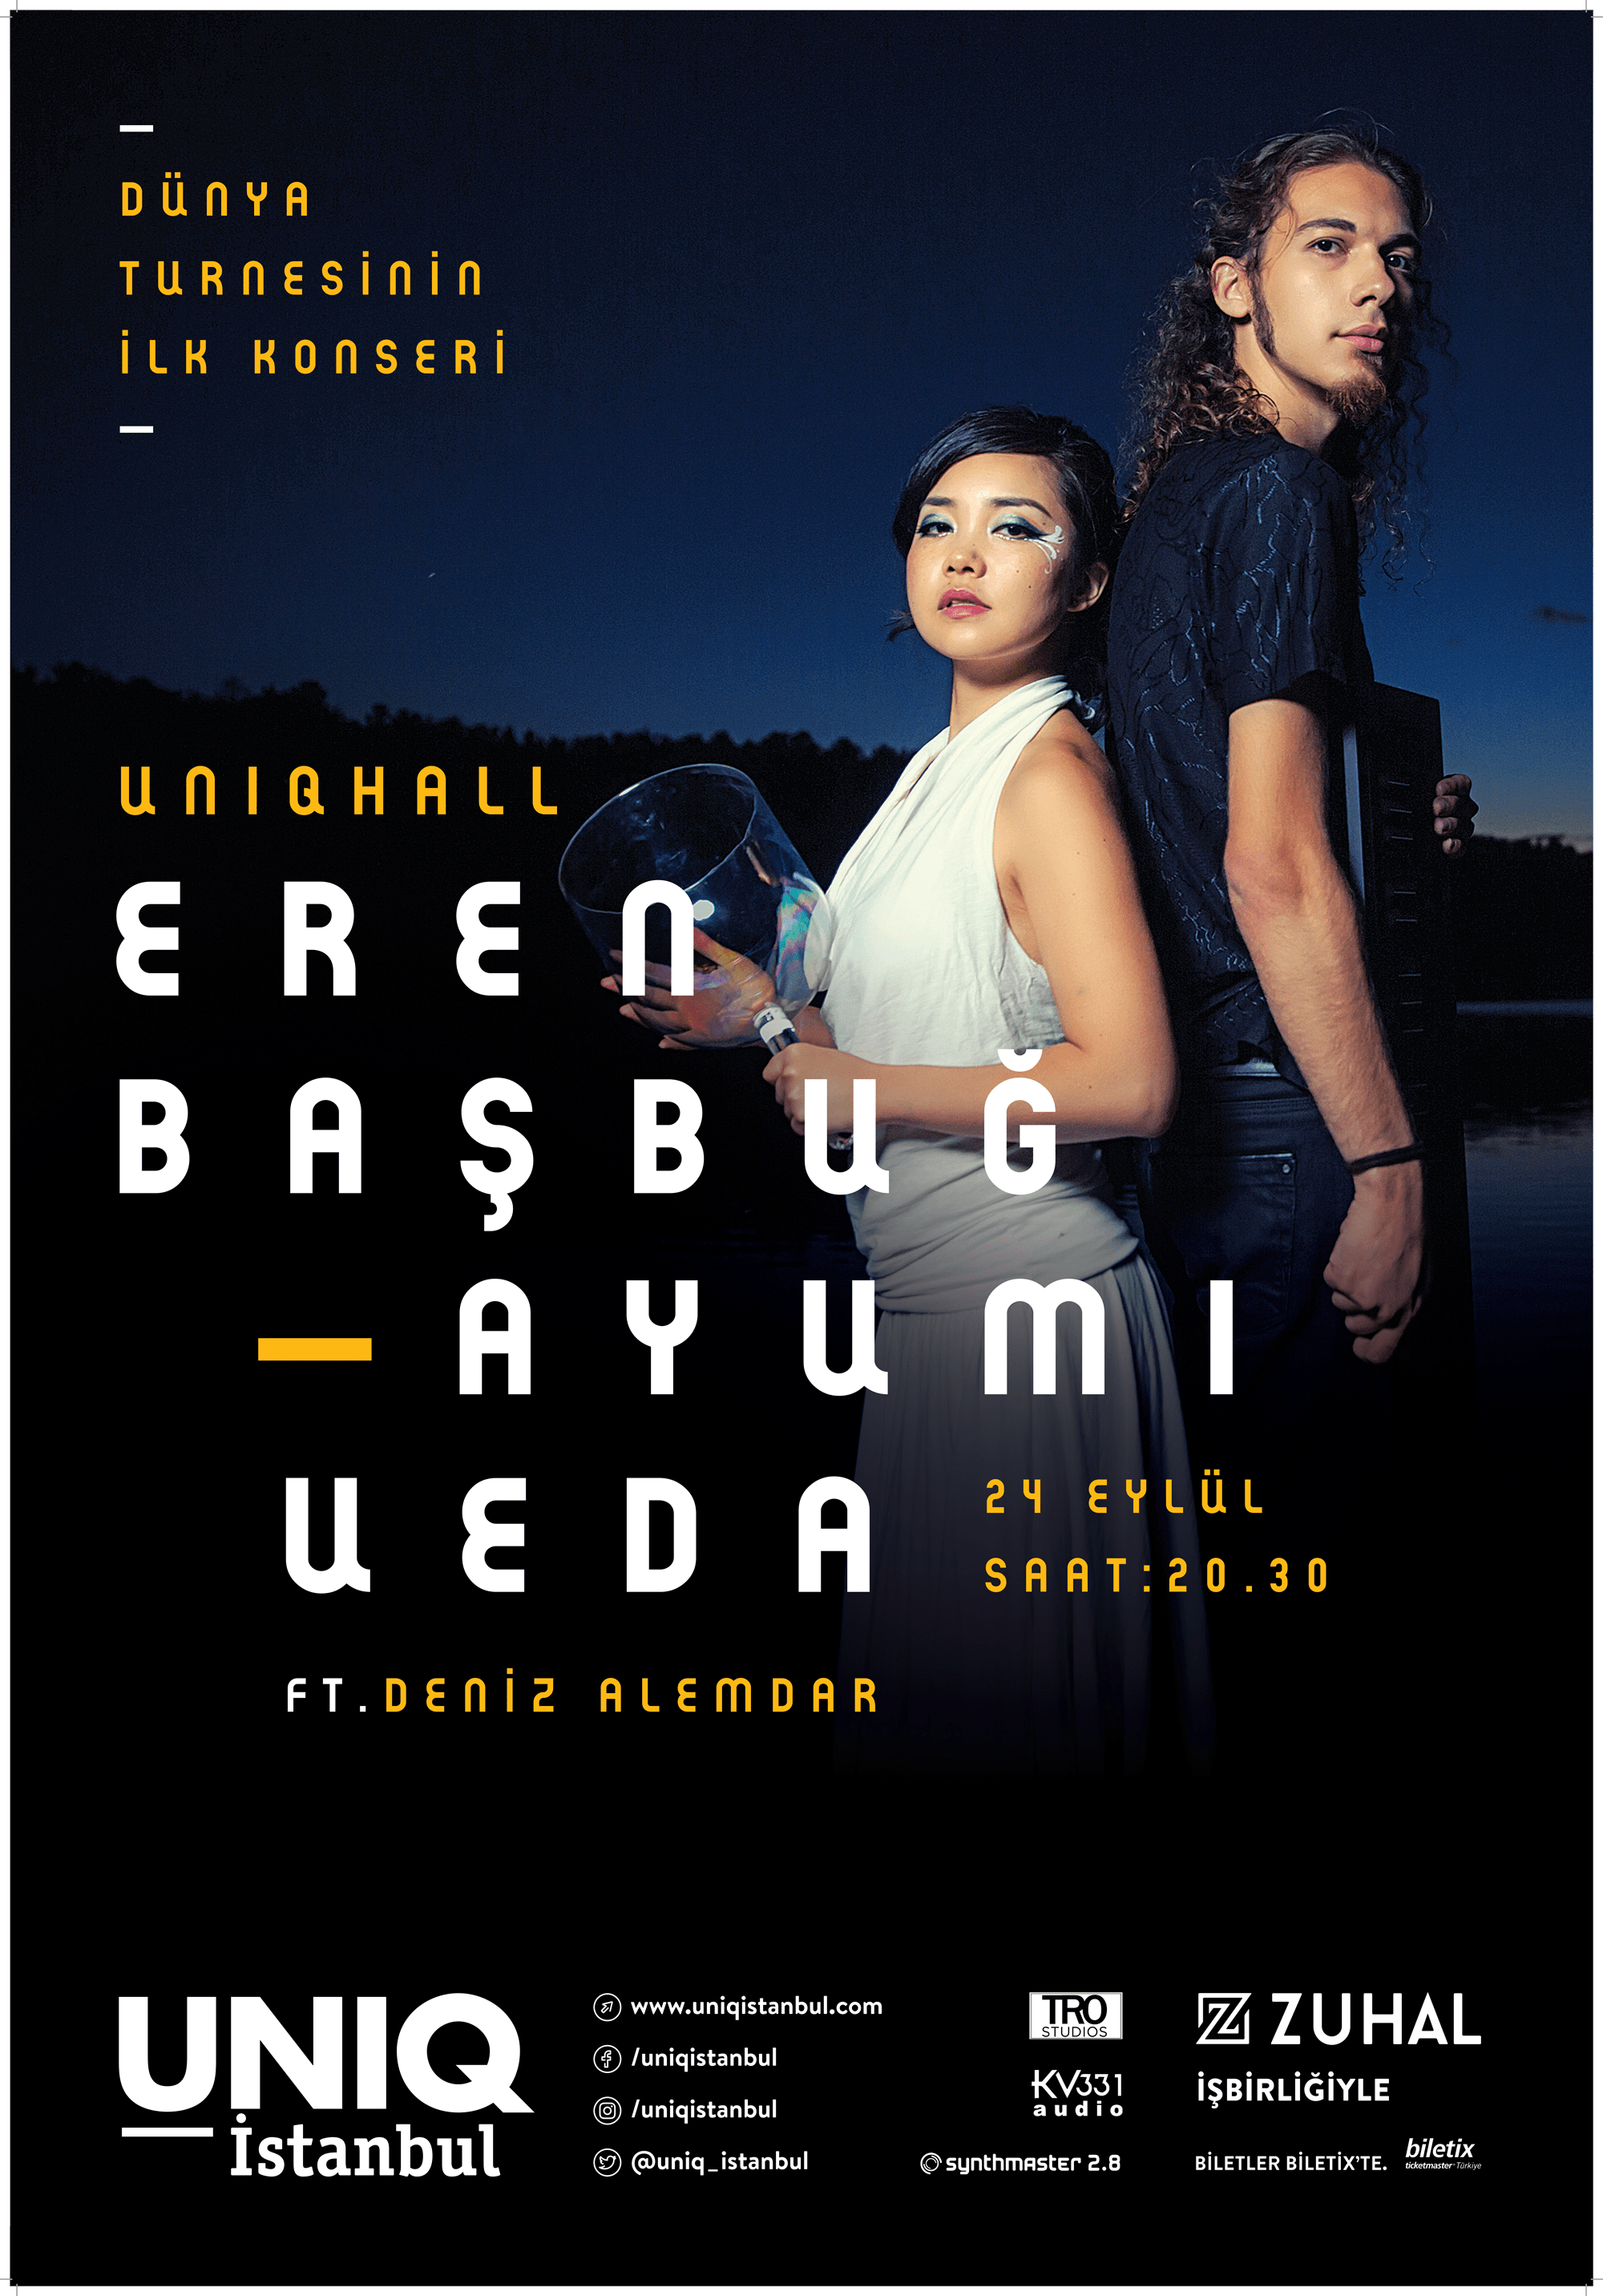 Eren-basbug-ayumi-ueda-poster